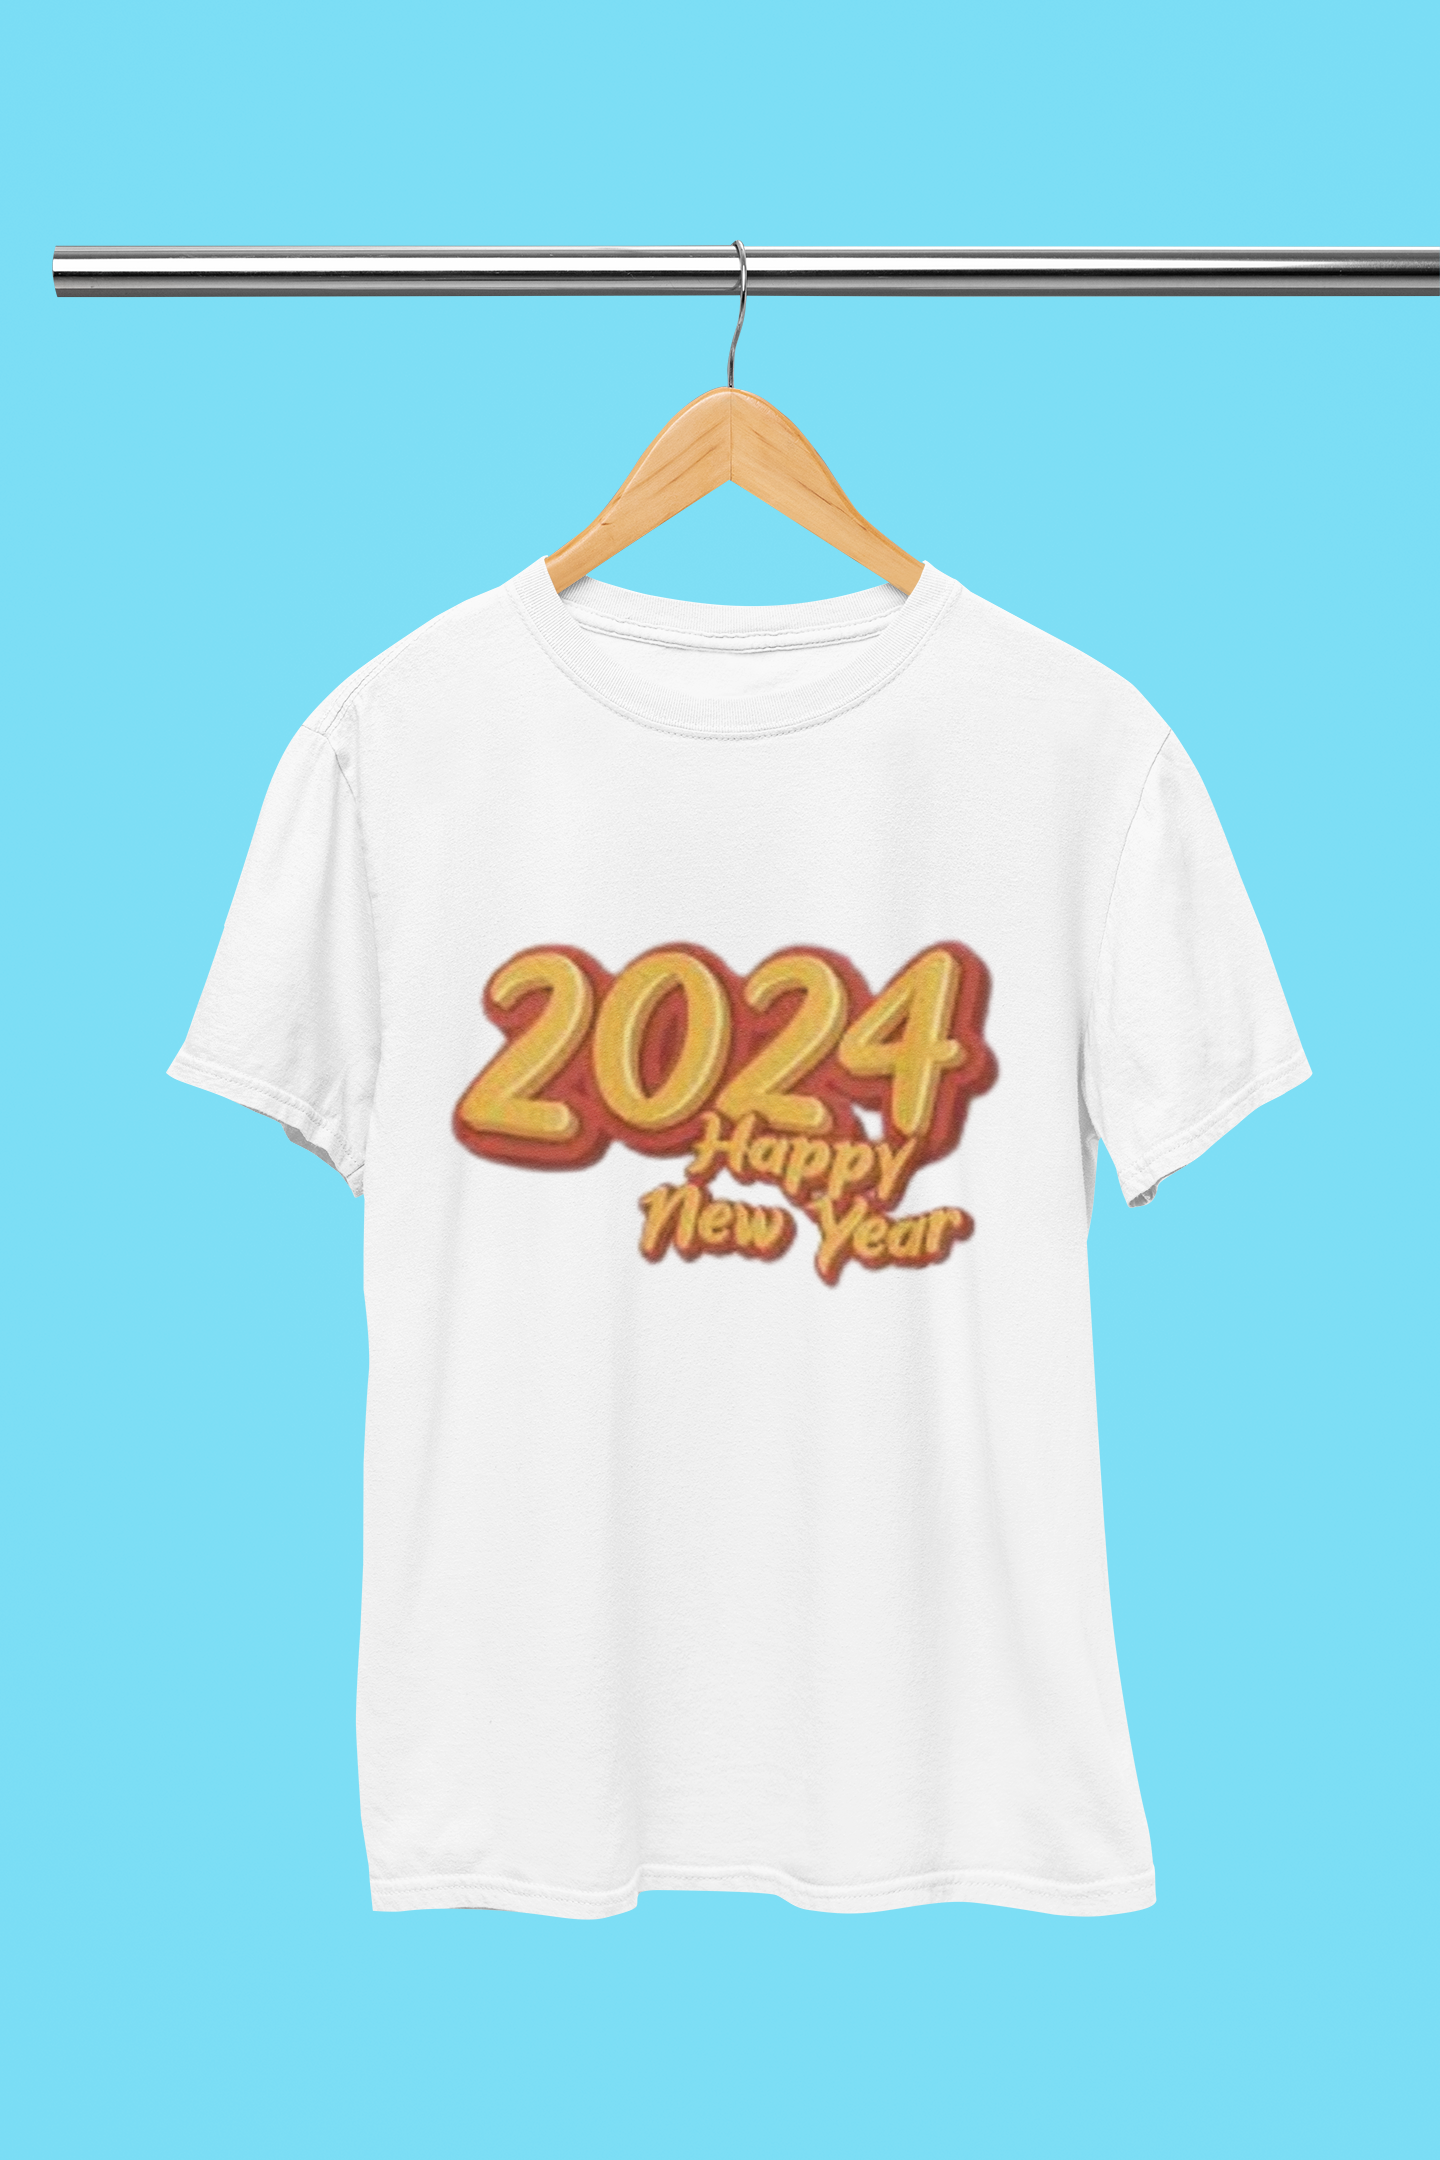 NEW YEAR 2024 T-SHIRT